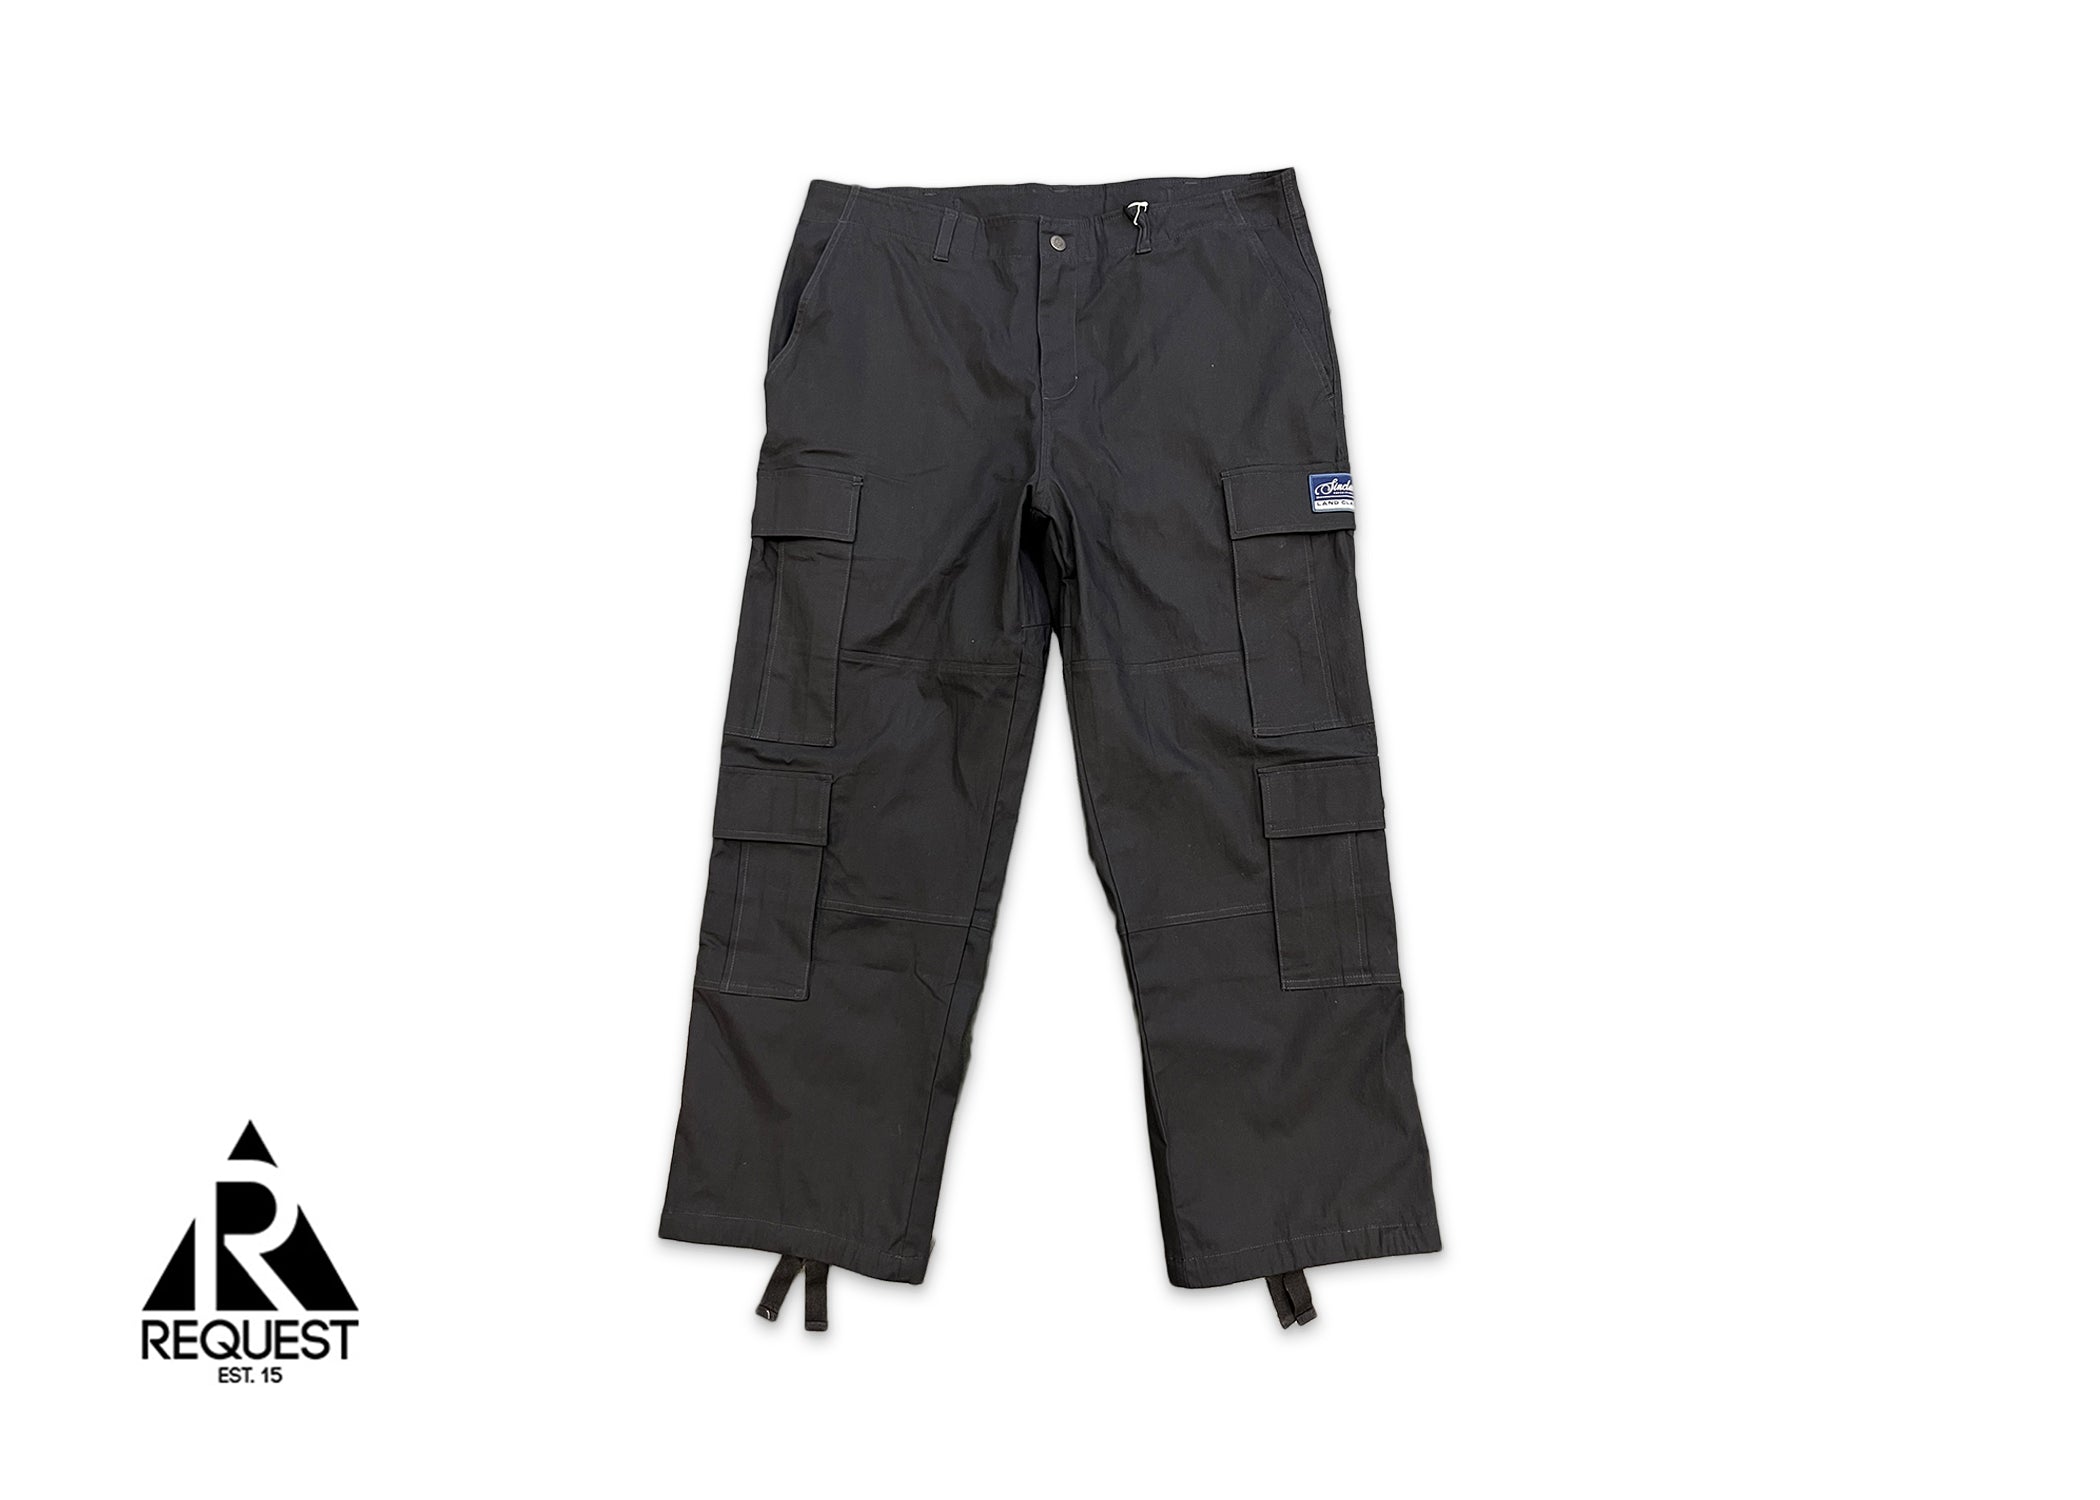 Sinclair RipStop Pants "Charcoal Gray"